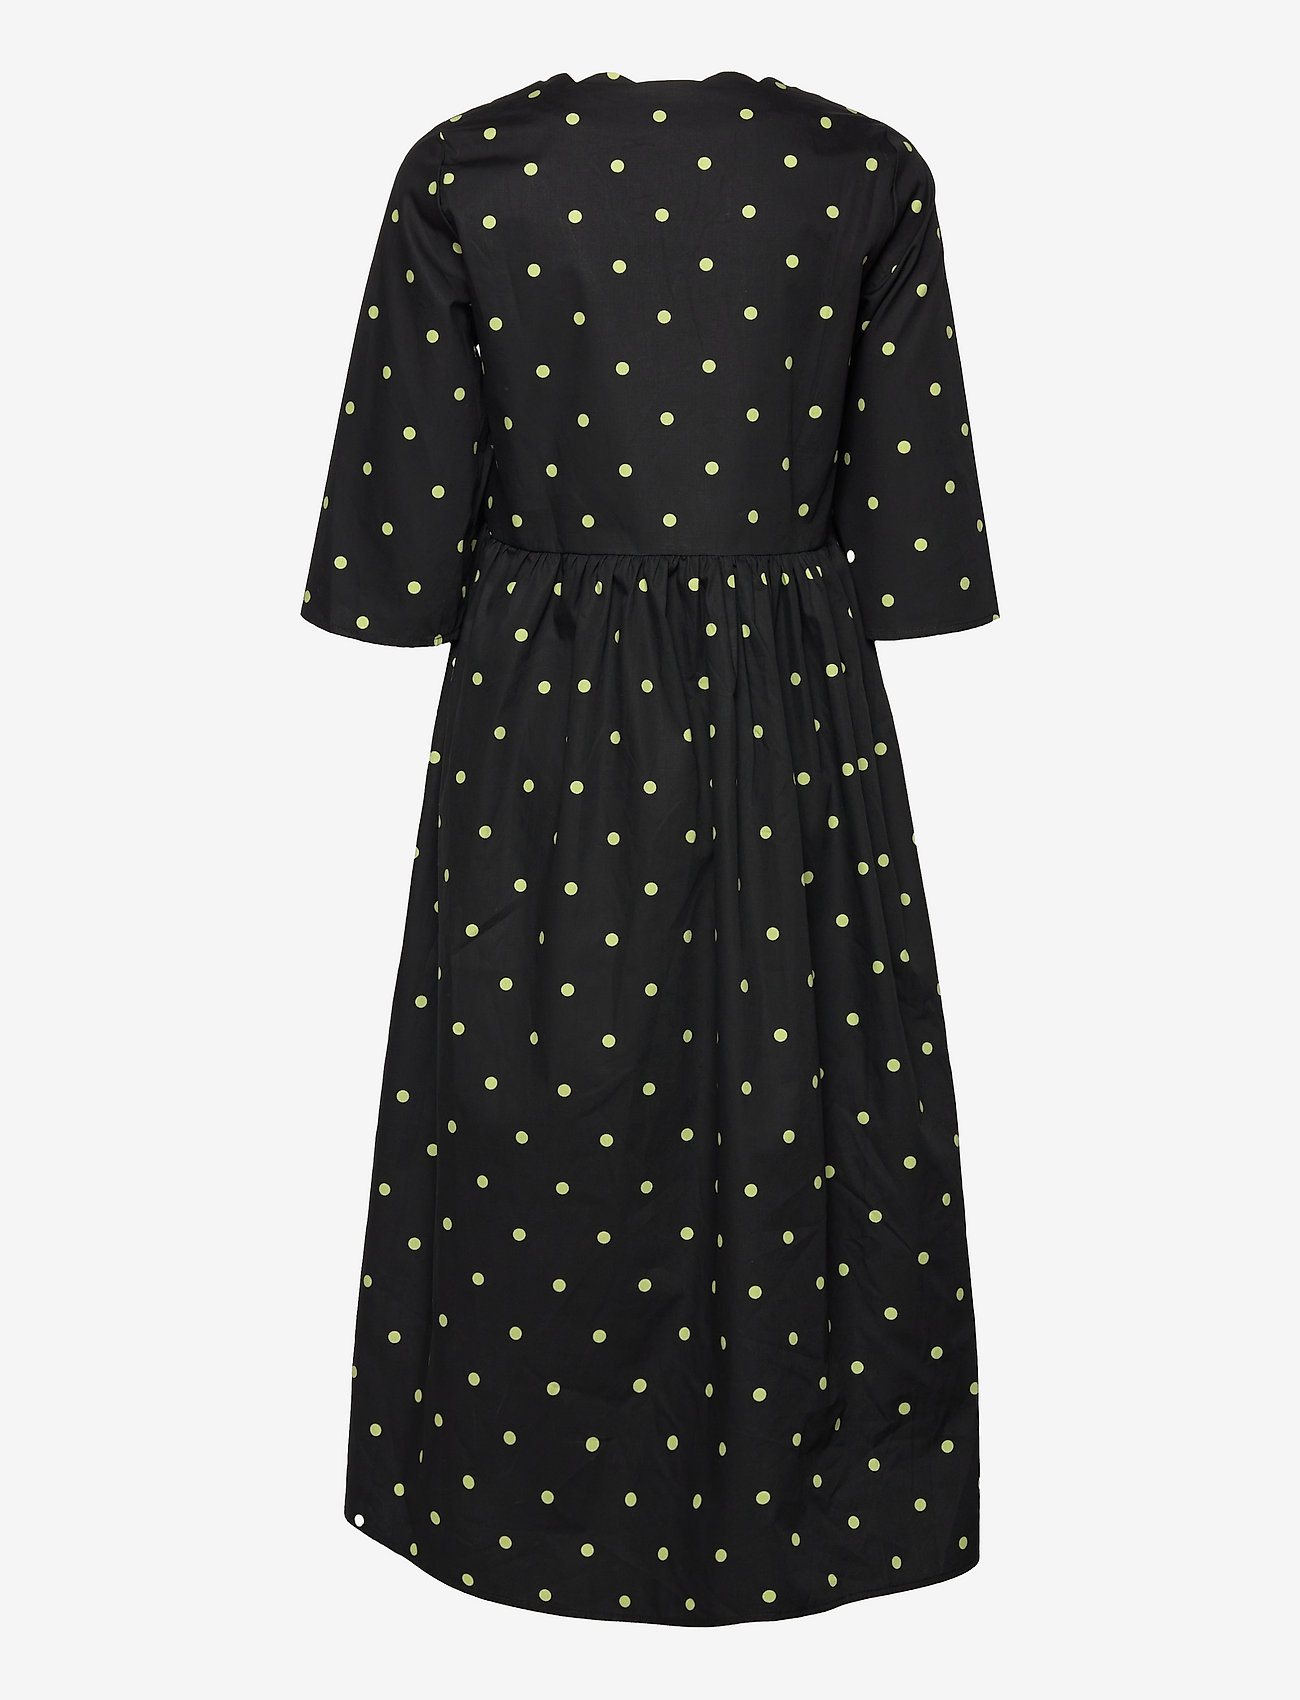 A-View - Sassi midi dress - midikleider - black with green dots - 1